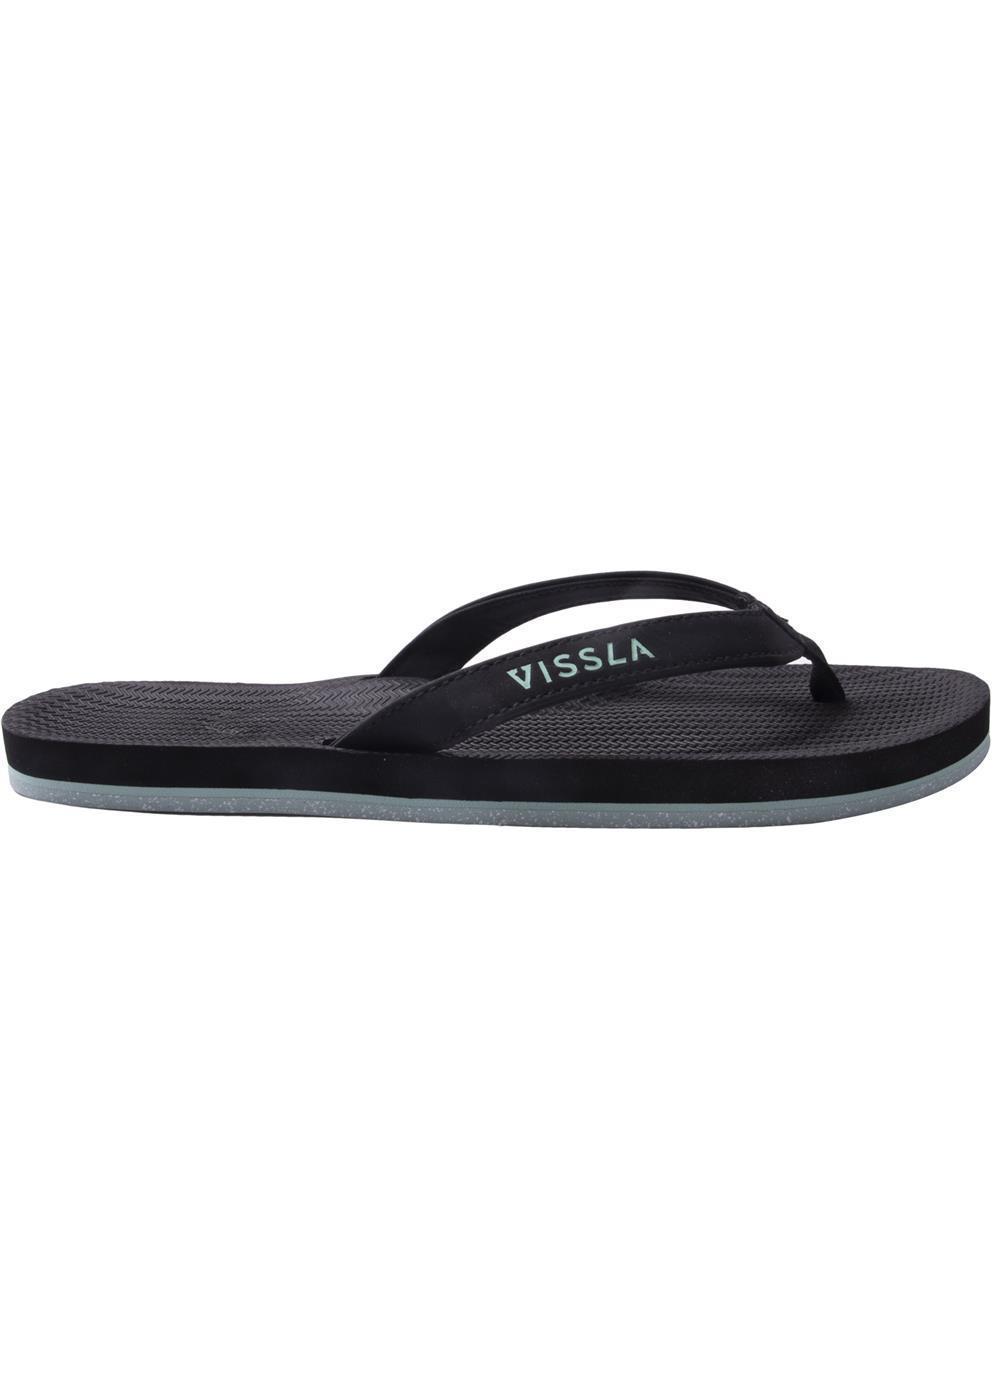 Black Vissla Sandal with a Jade Sole - Side View